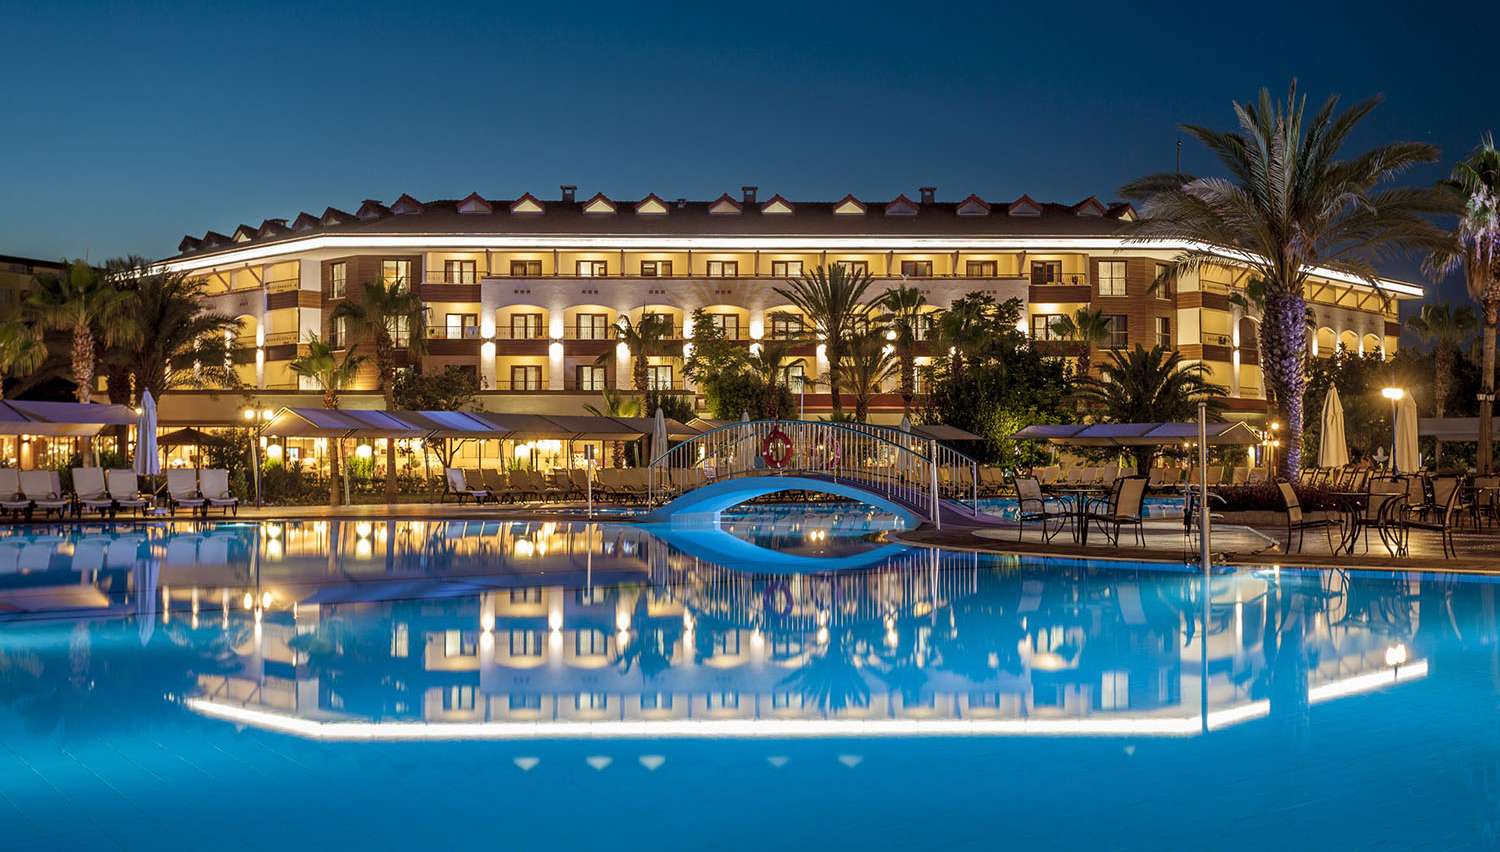 Türgi Side Club Hotel Turan Prince World